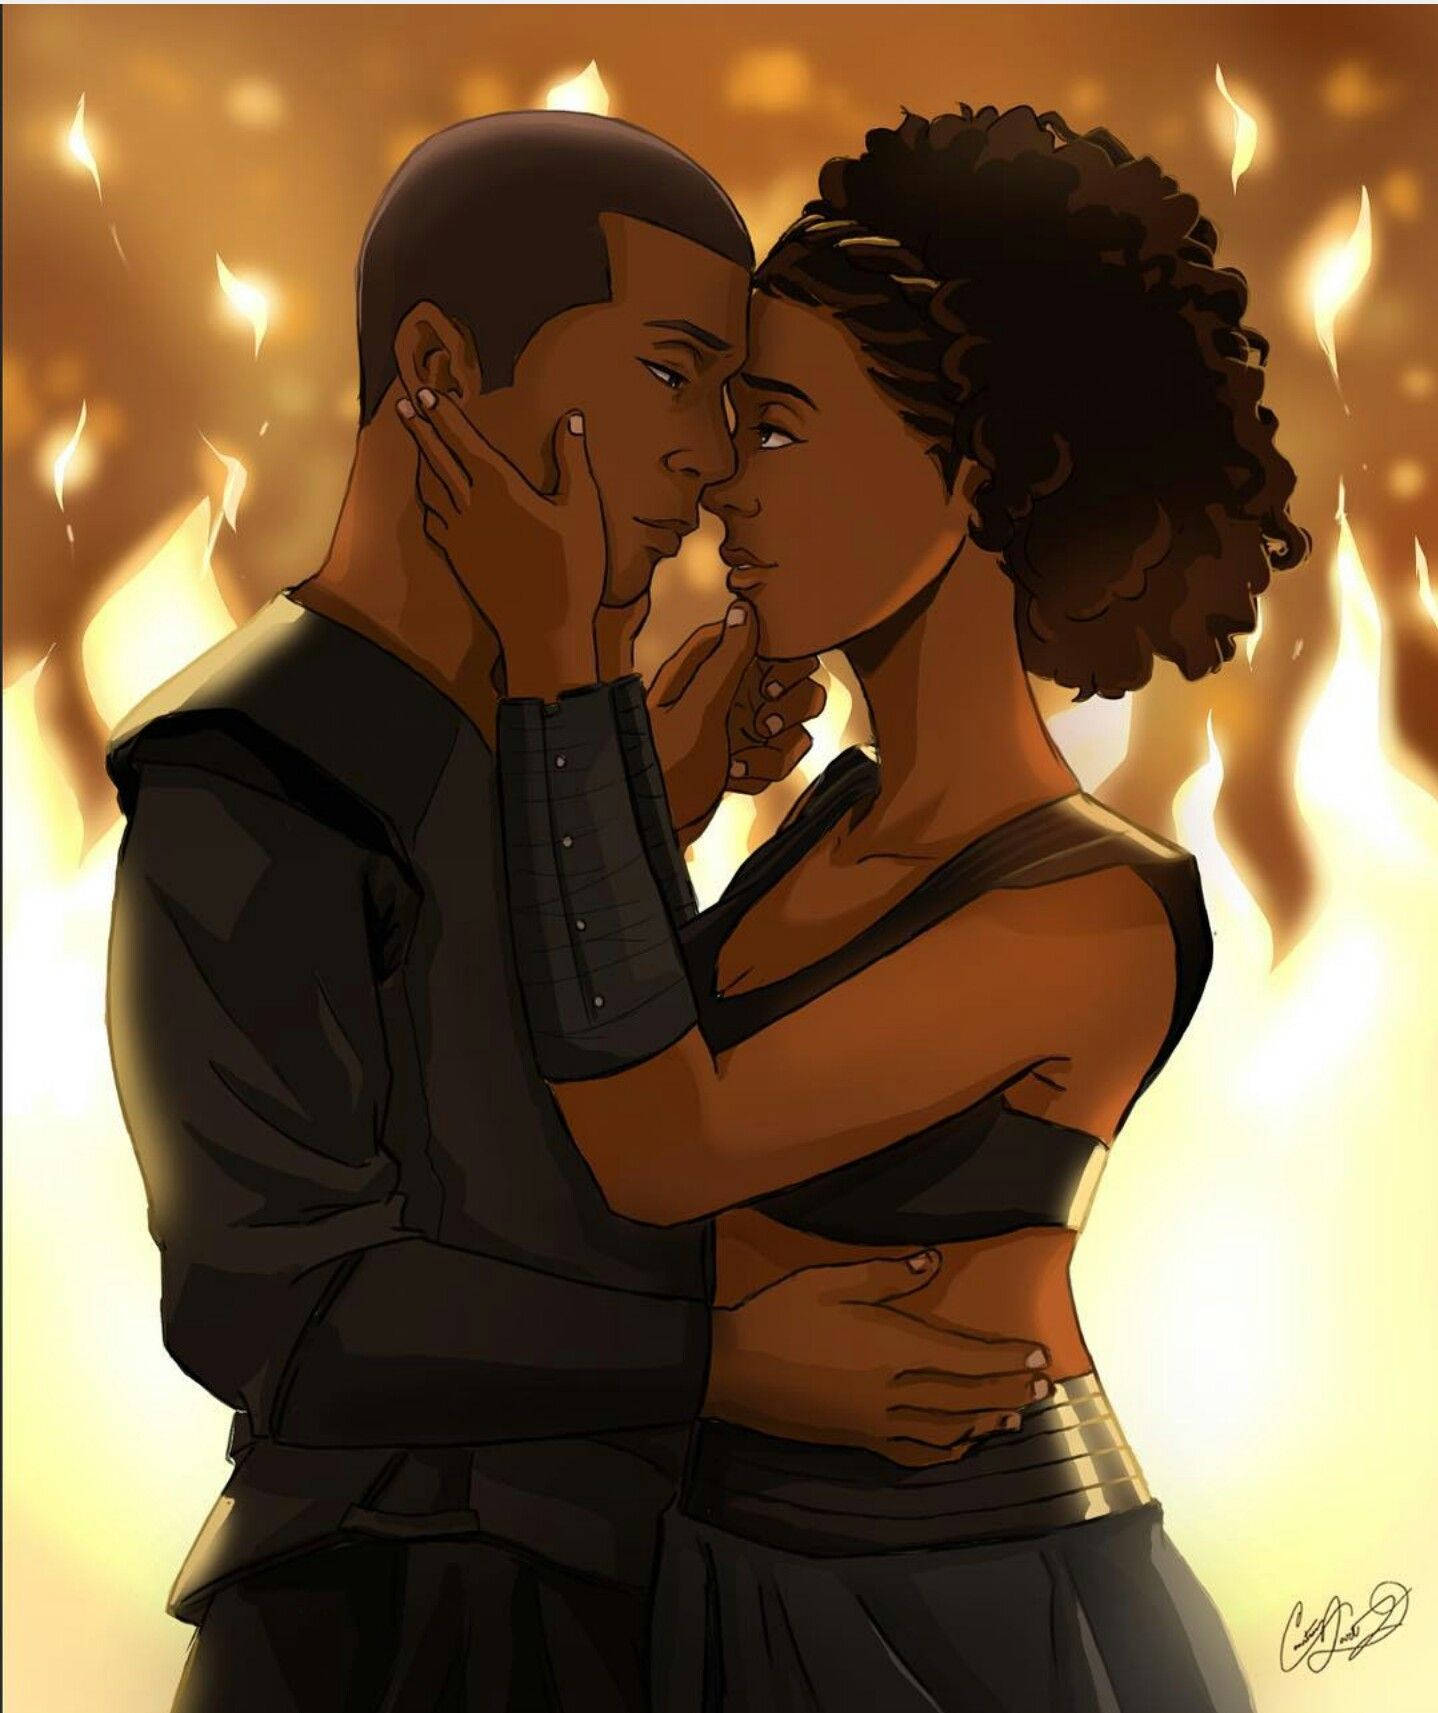 ashlea martinez recommends Cute Black Cartoon Couples